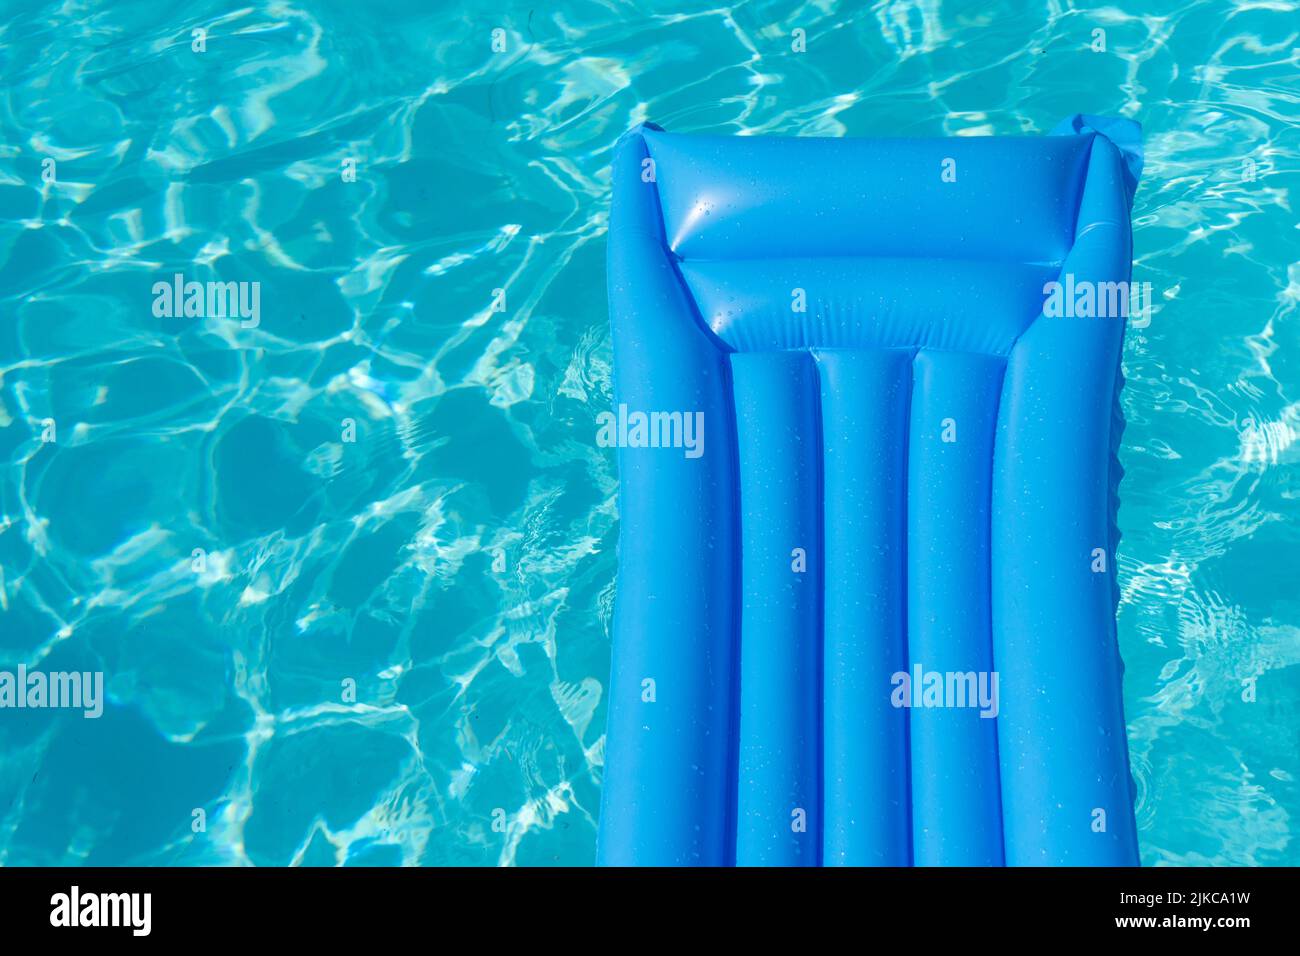 https://c8.alamy.com/comp/2JKCA1W/bright-blue-summer-pool-lounger-float-on-a-rippled-swimming-pool-2JKCA1W.jpg